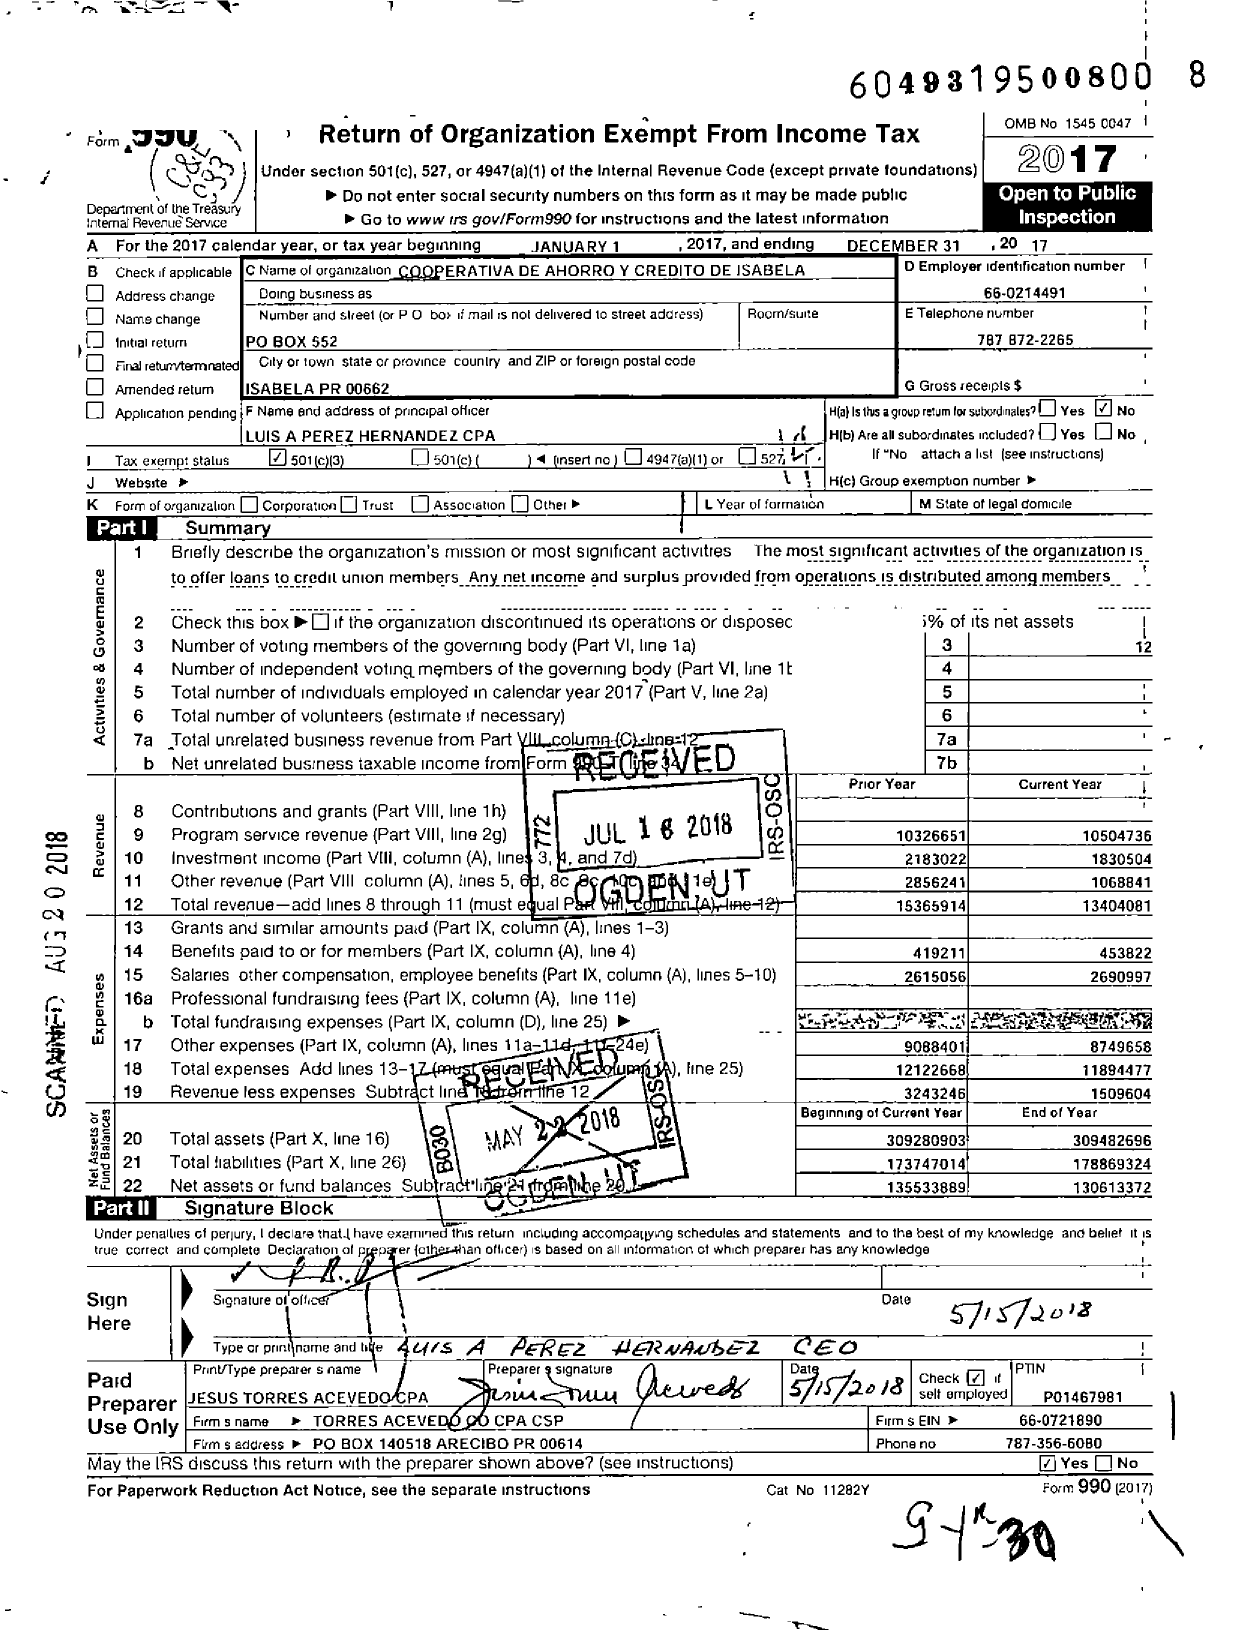 Image of first page of 2017 Form 990O for Cooperativa de Ahorro Y Credito de Isabela